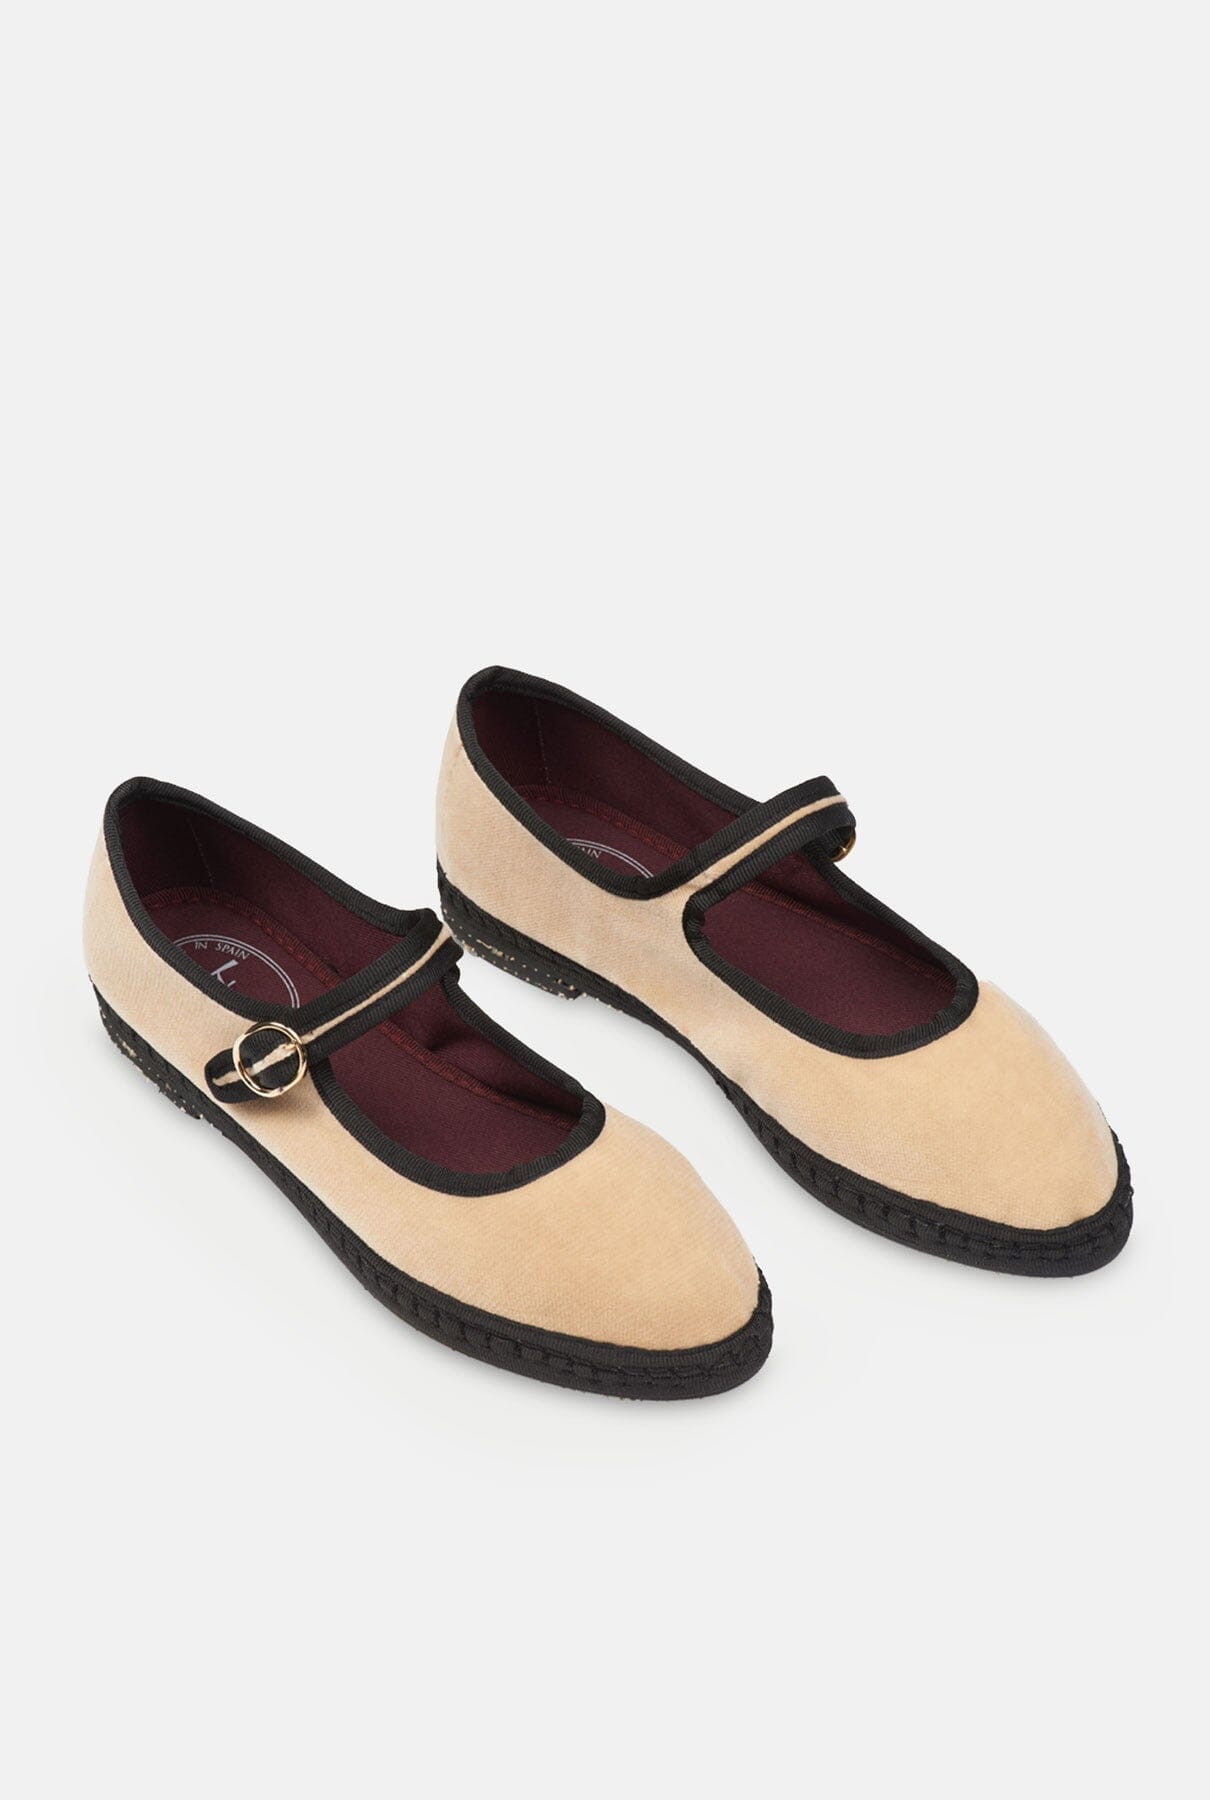 Theodora Flat shoes Flabelus 